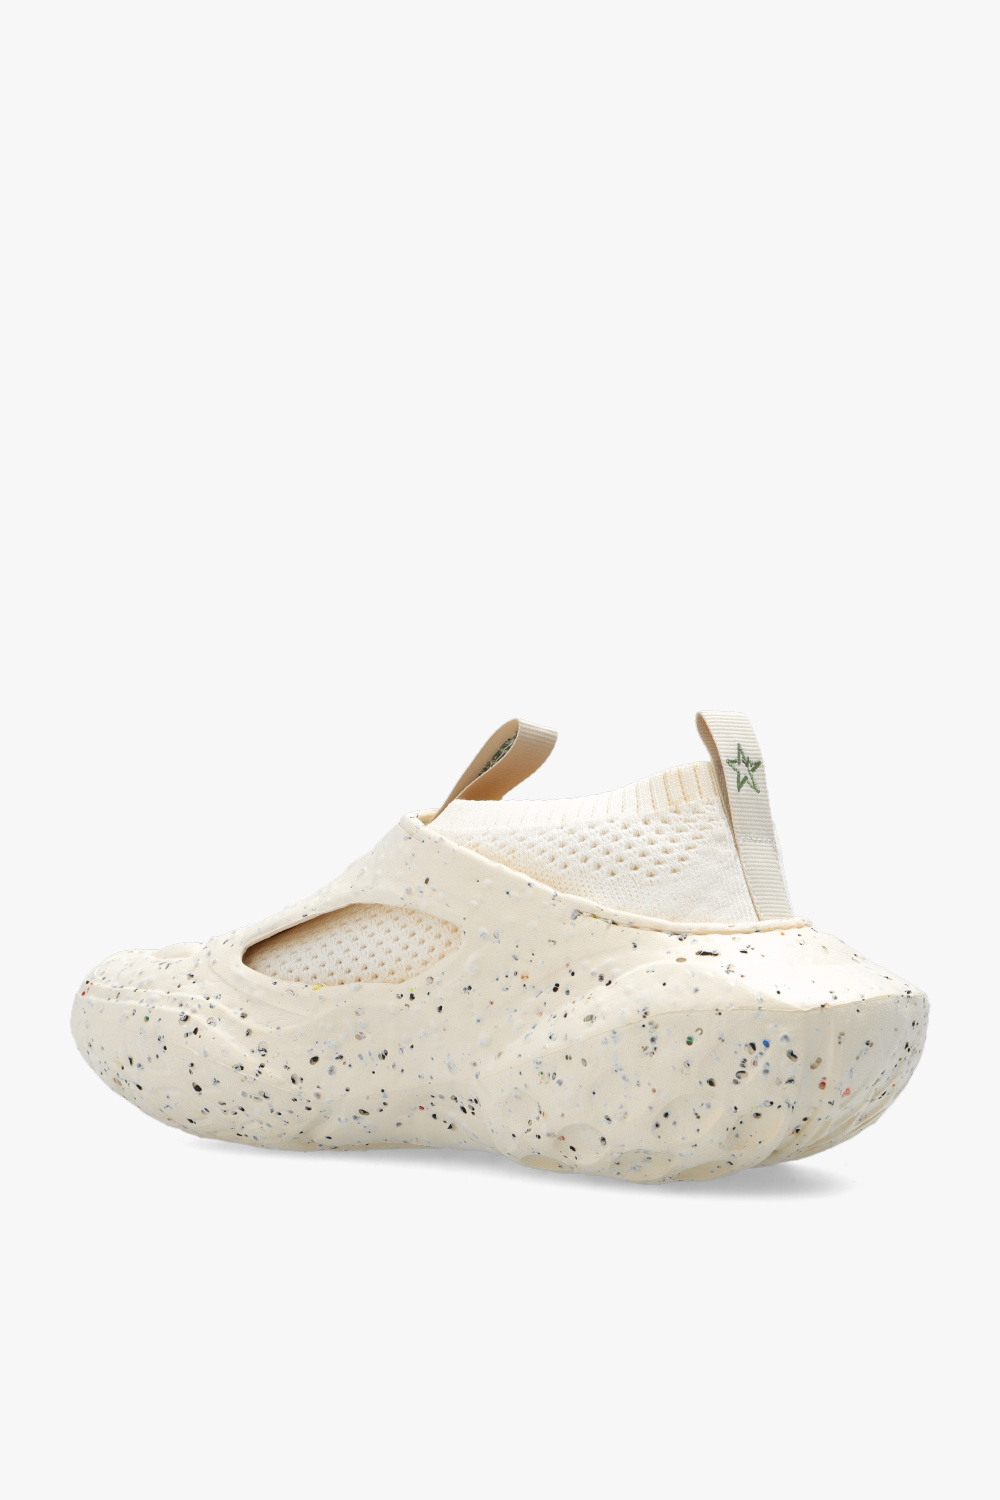 Converse ‘Sponge Crater’ sneakers